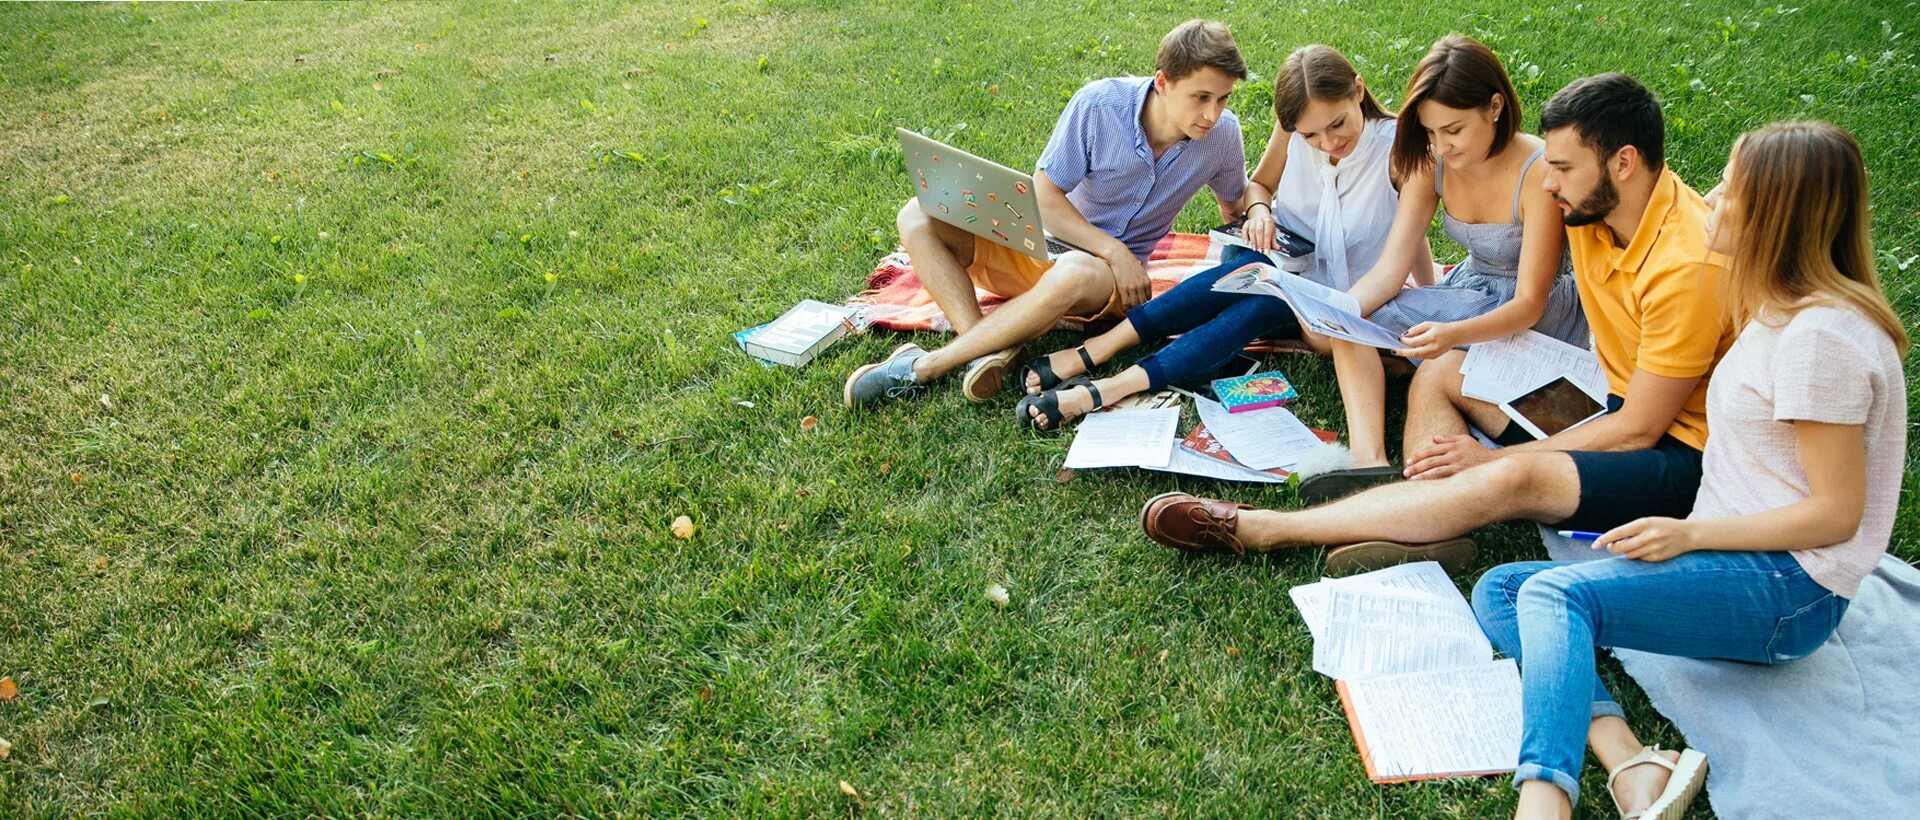 Студенты природа групповой. Студенты в парке. Студенты на отдыхе. Студенты на газоне. Студенты на свежем воздухе.